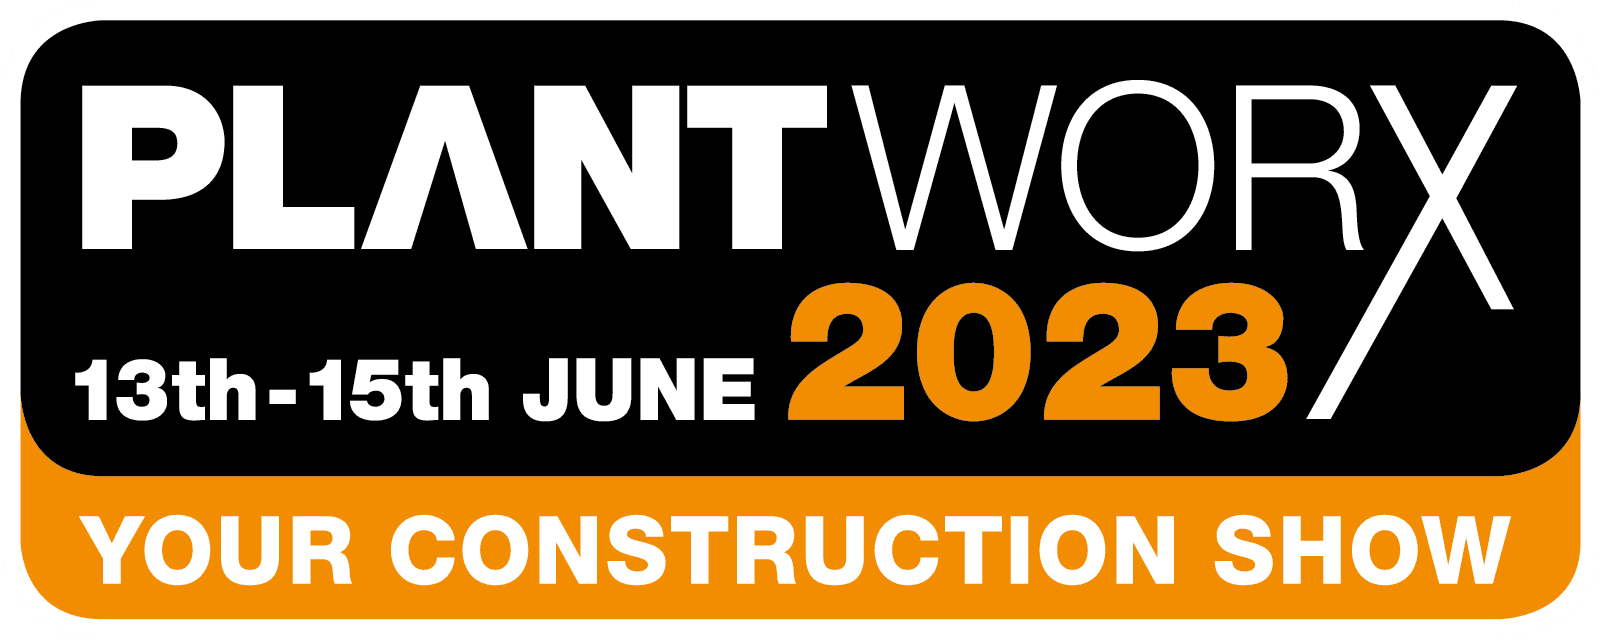 Plantworx 2023 - 13th - 15th June